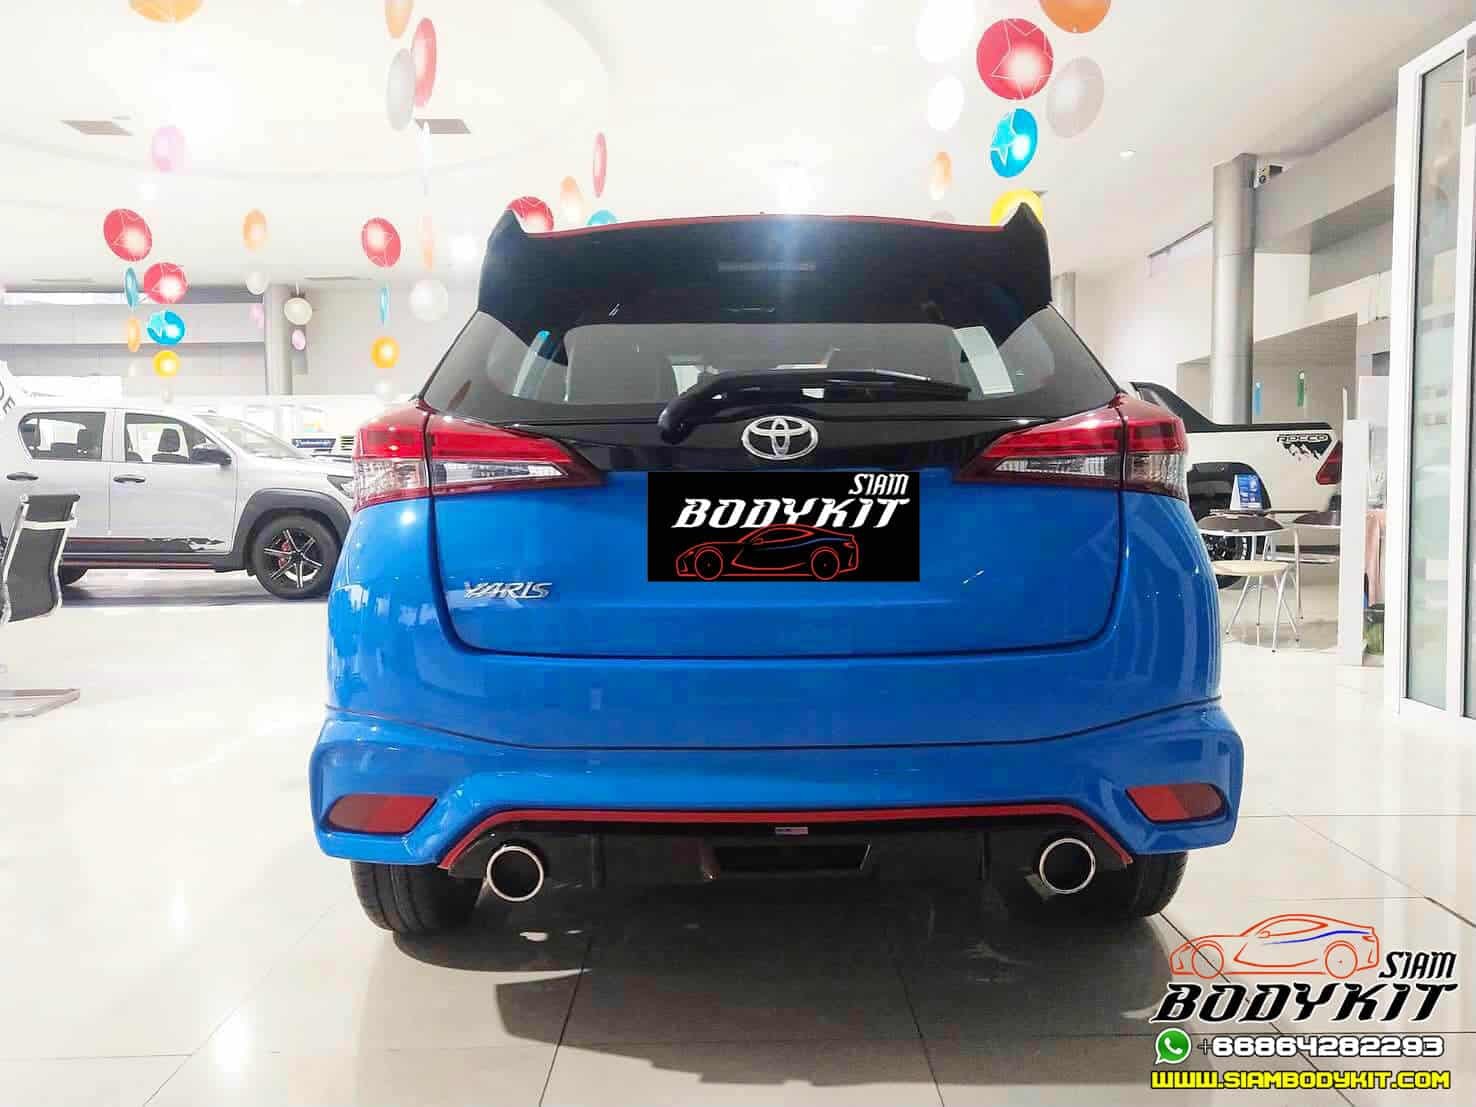 B-Sport FULL SET Bodykit for Toyota Yaris Hatchback 2020-2021 Entry Model (COLOR)